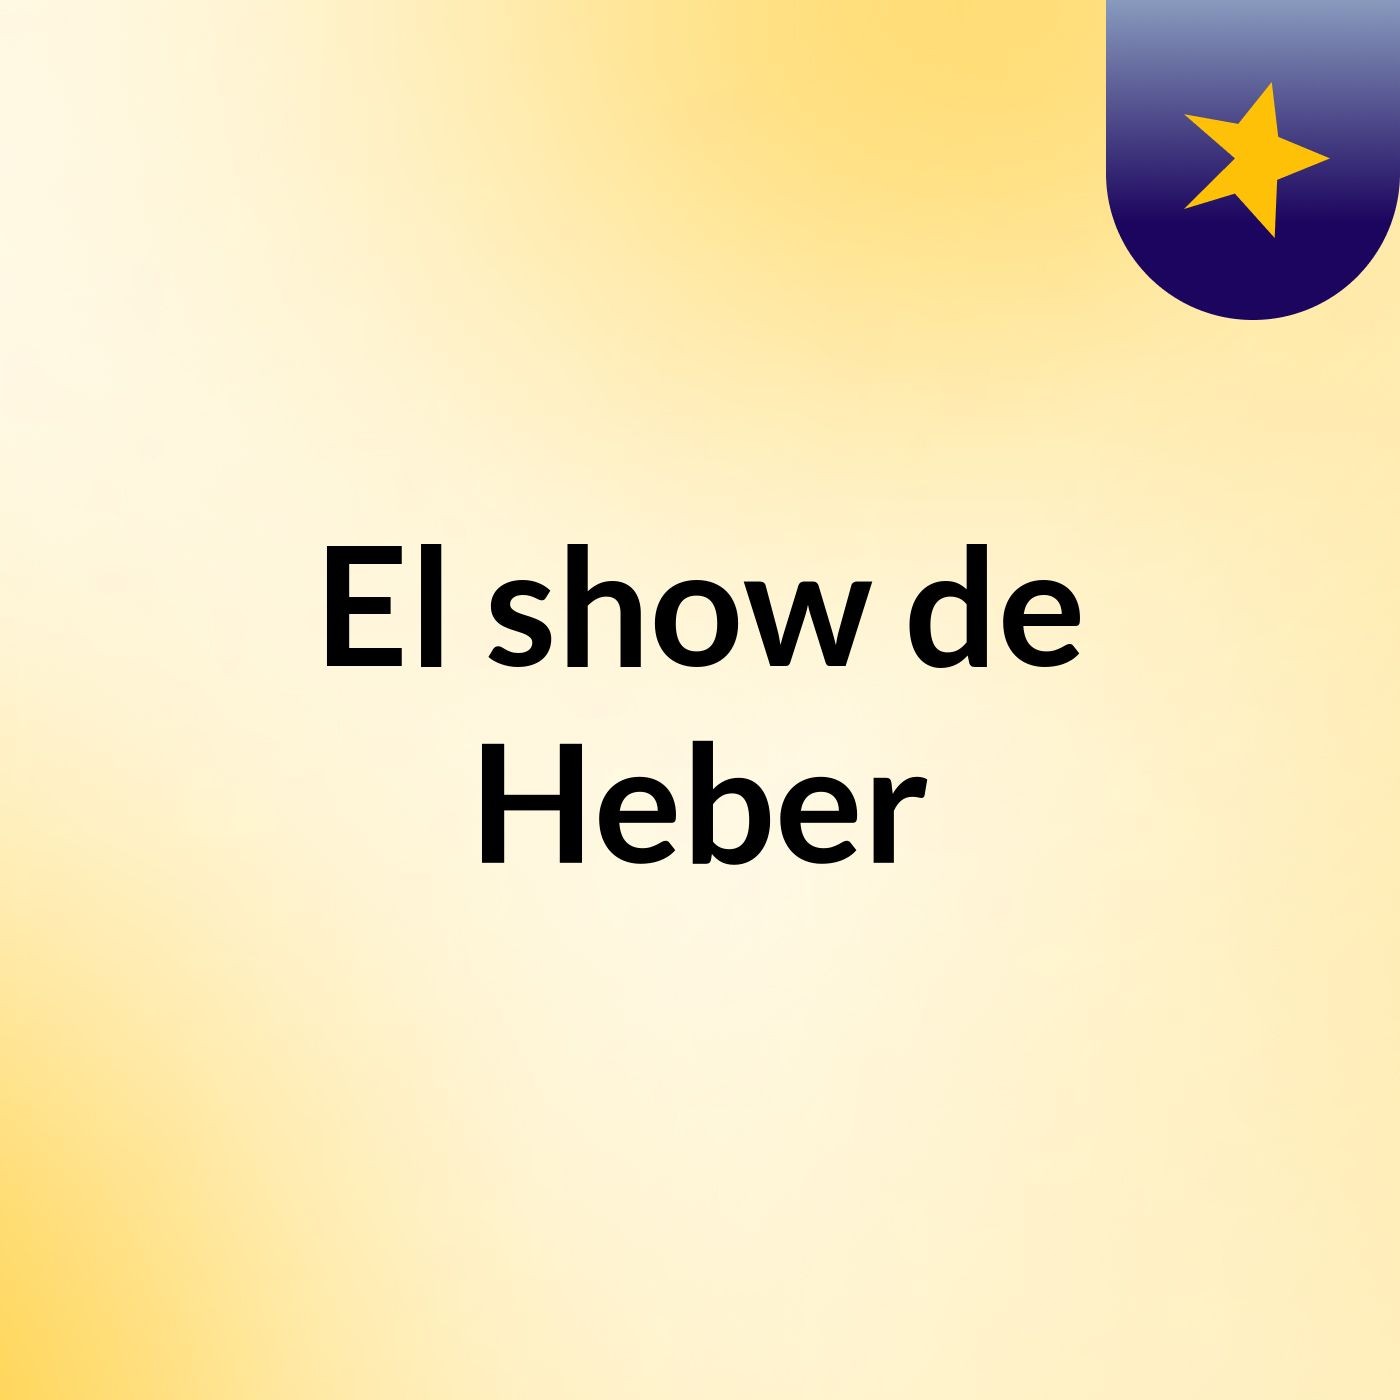 El show de Heber